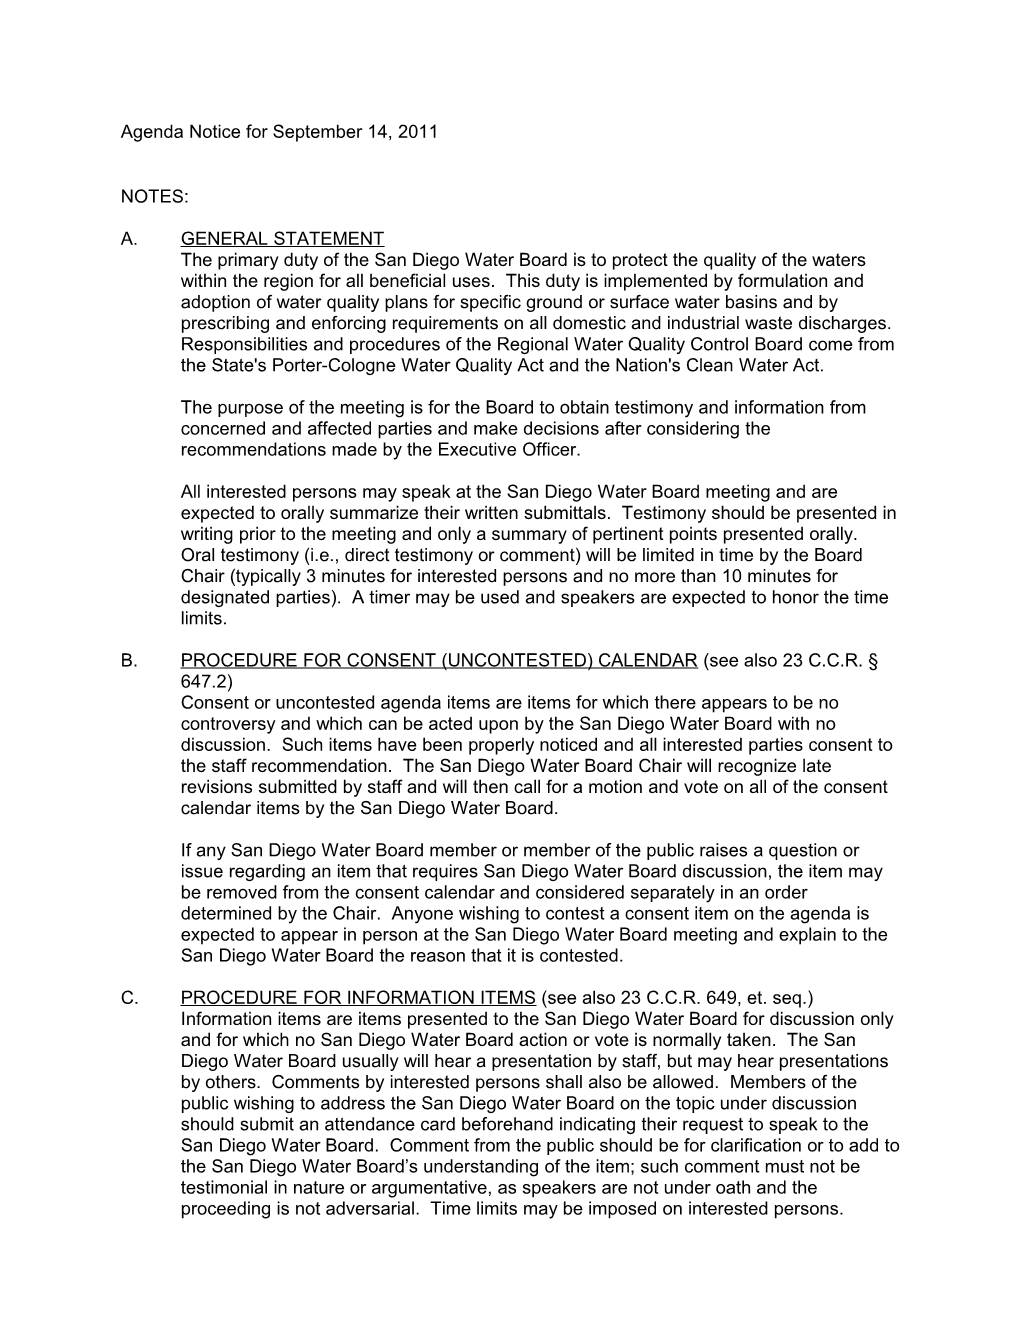 Agenda Notice Forseptember 14, 2011